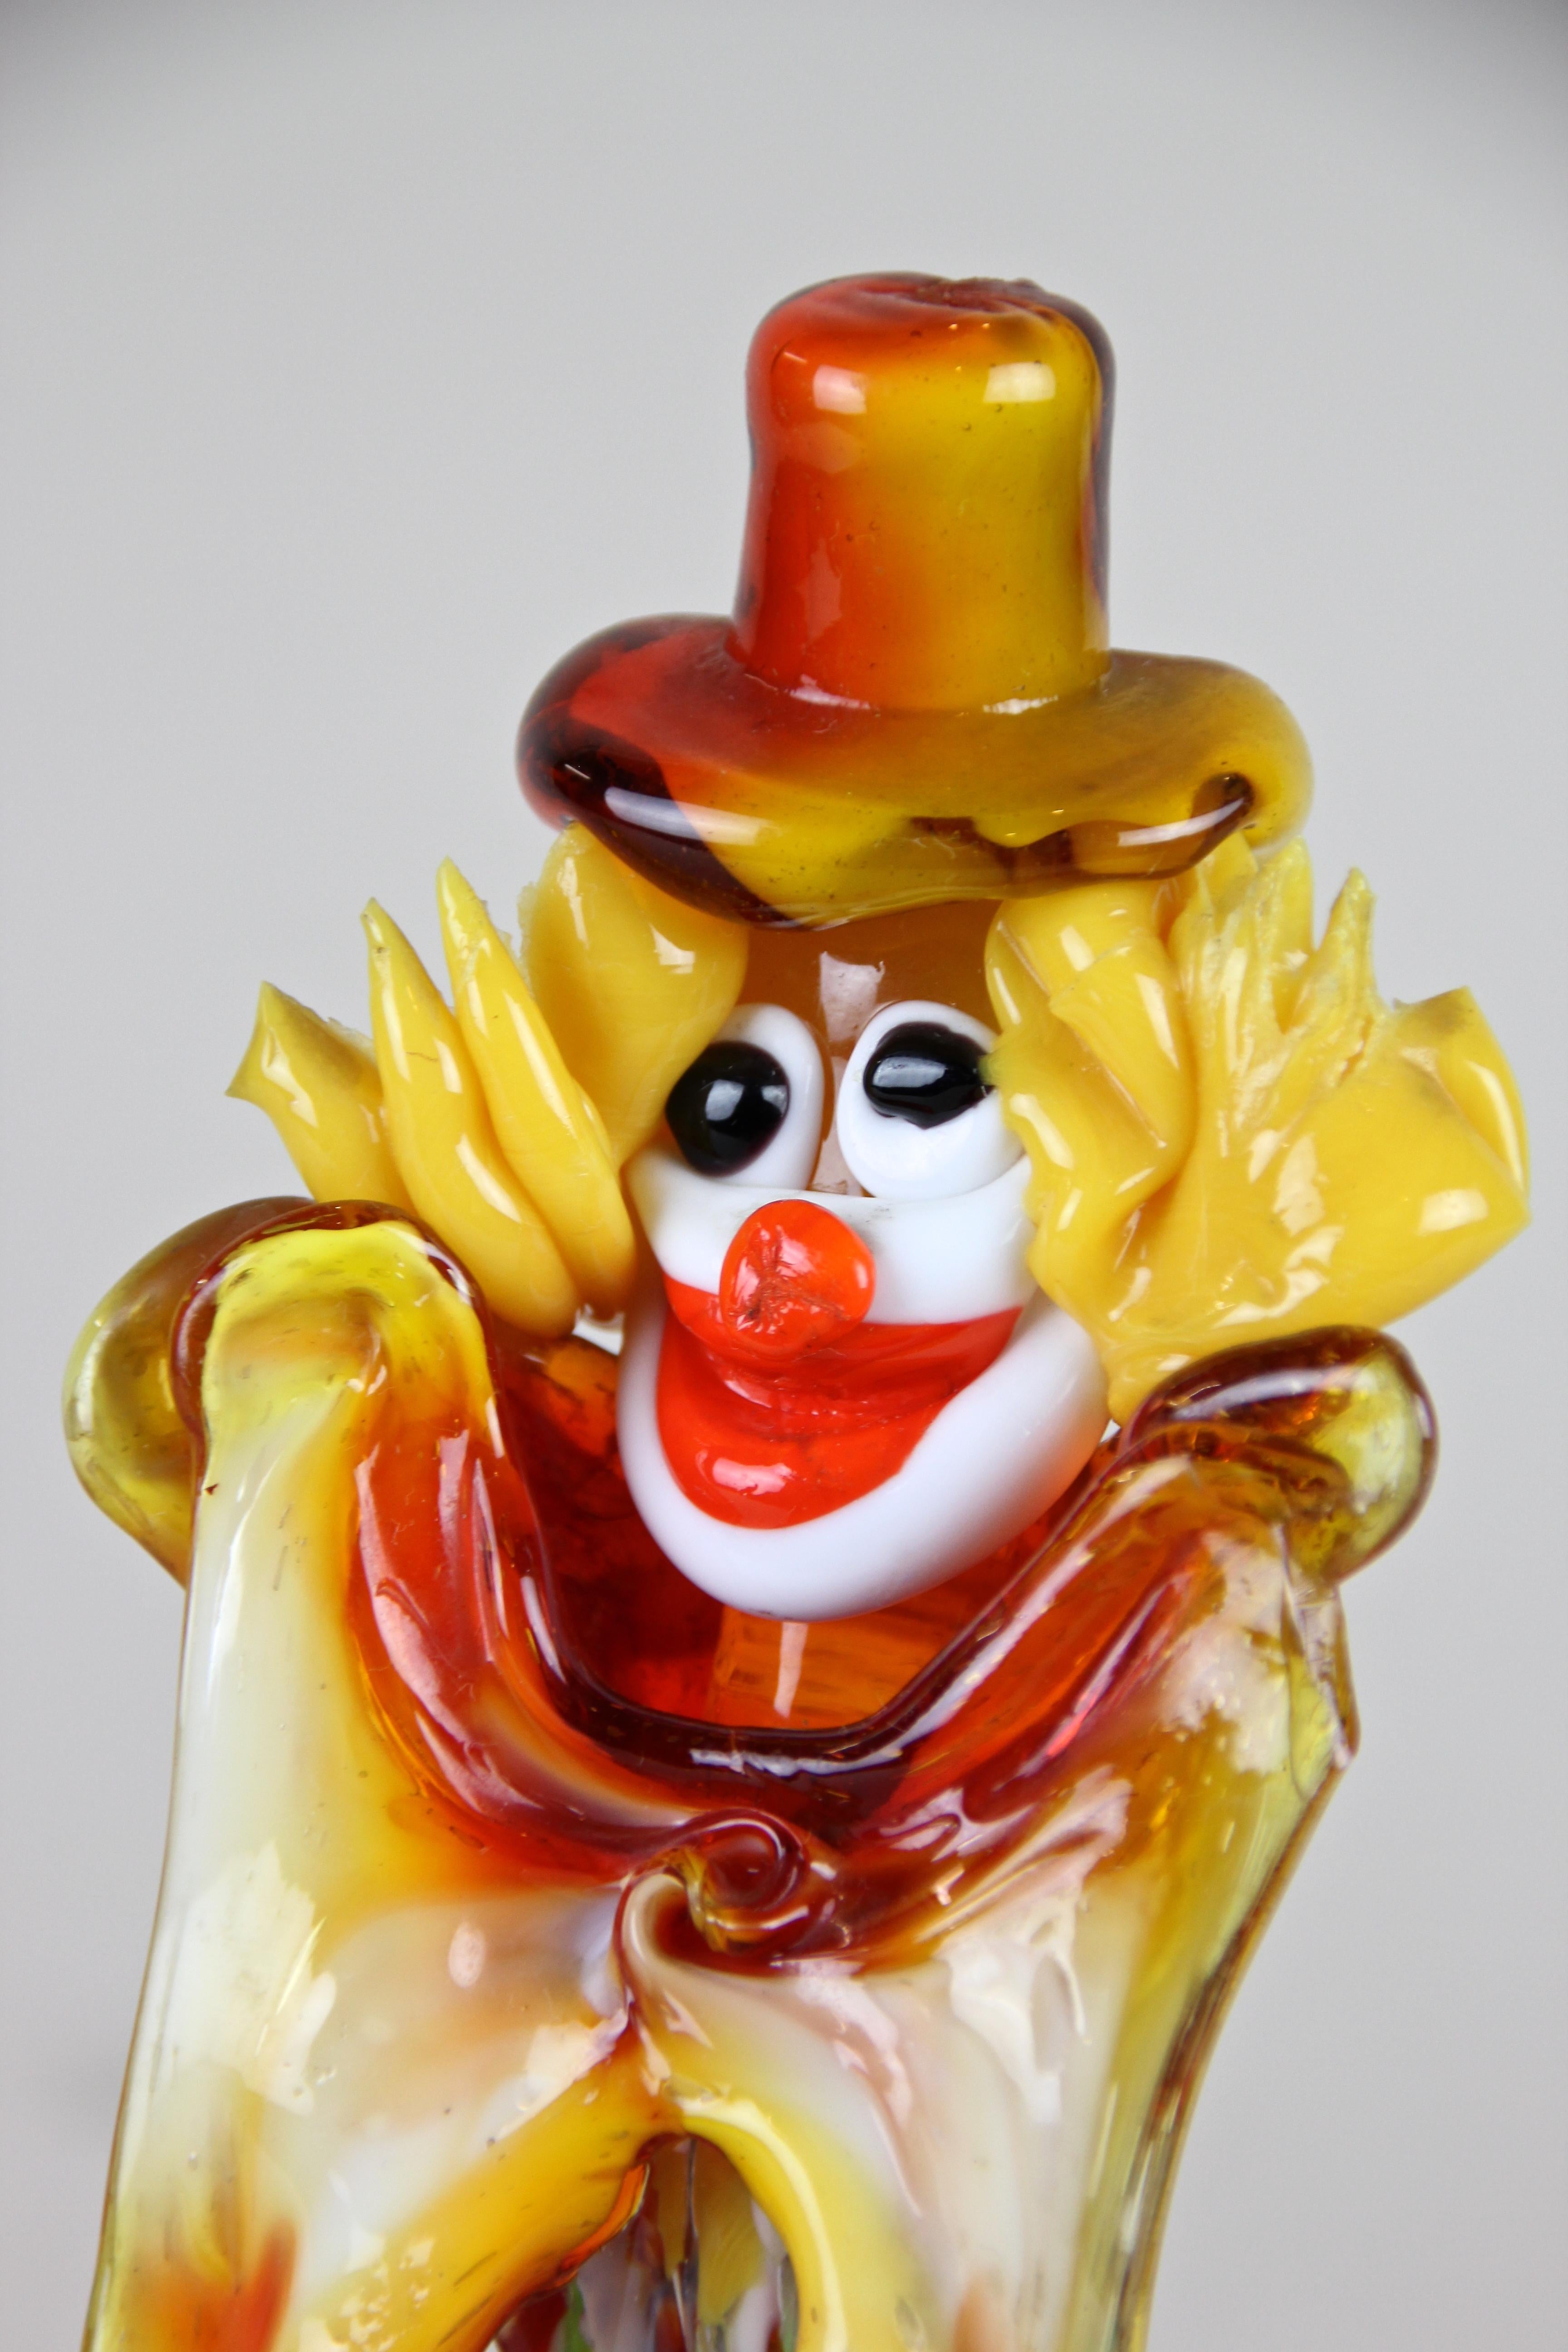 Murano Glass Clown Italy Circa 1950 For Sale At 1stdibs Murano Clown Murano Glass Clowns